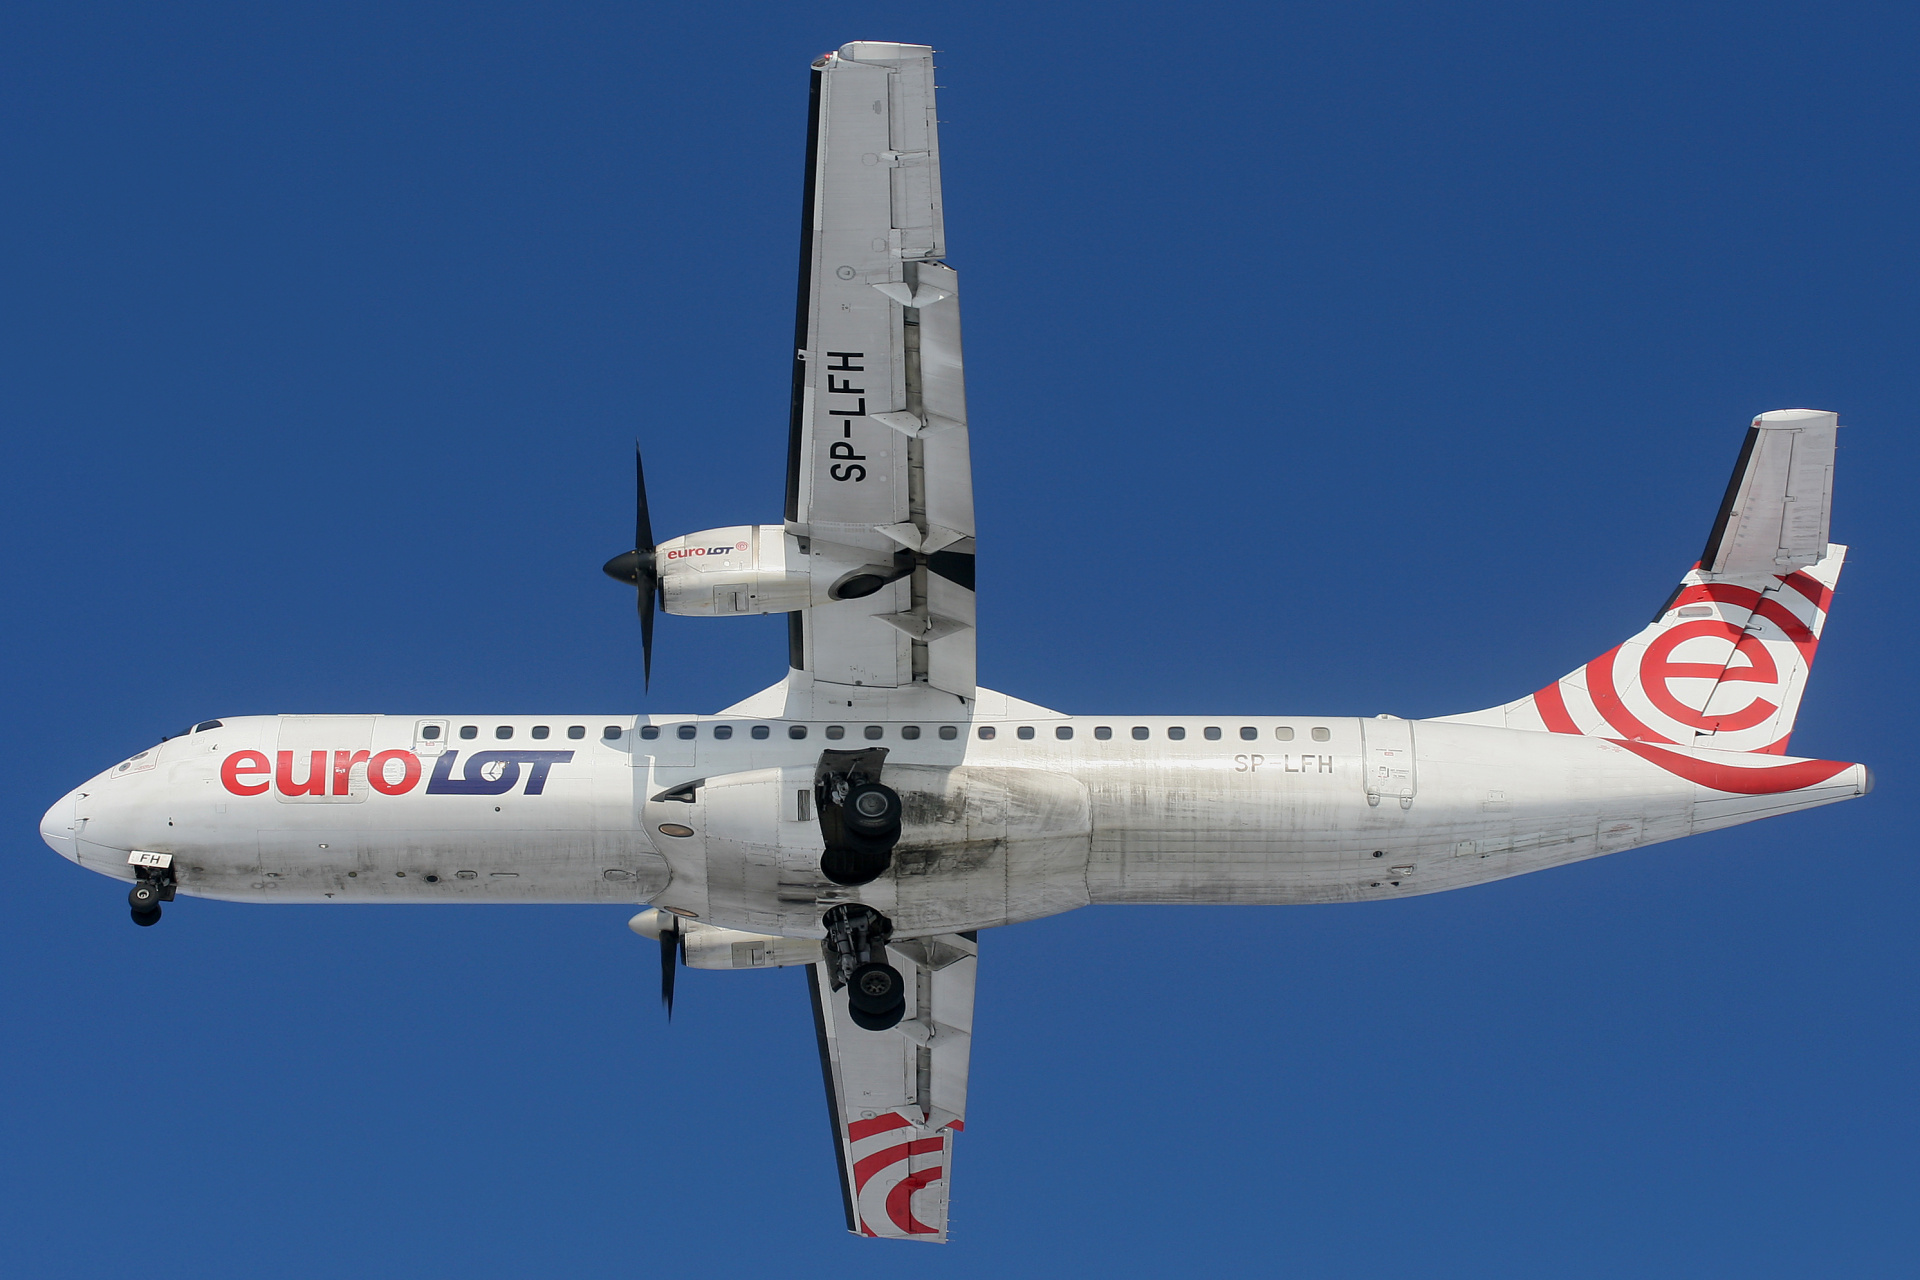 SP-LFH (Samoloty » Spotting na EPWA » ATR 72 » EuroLOT)